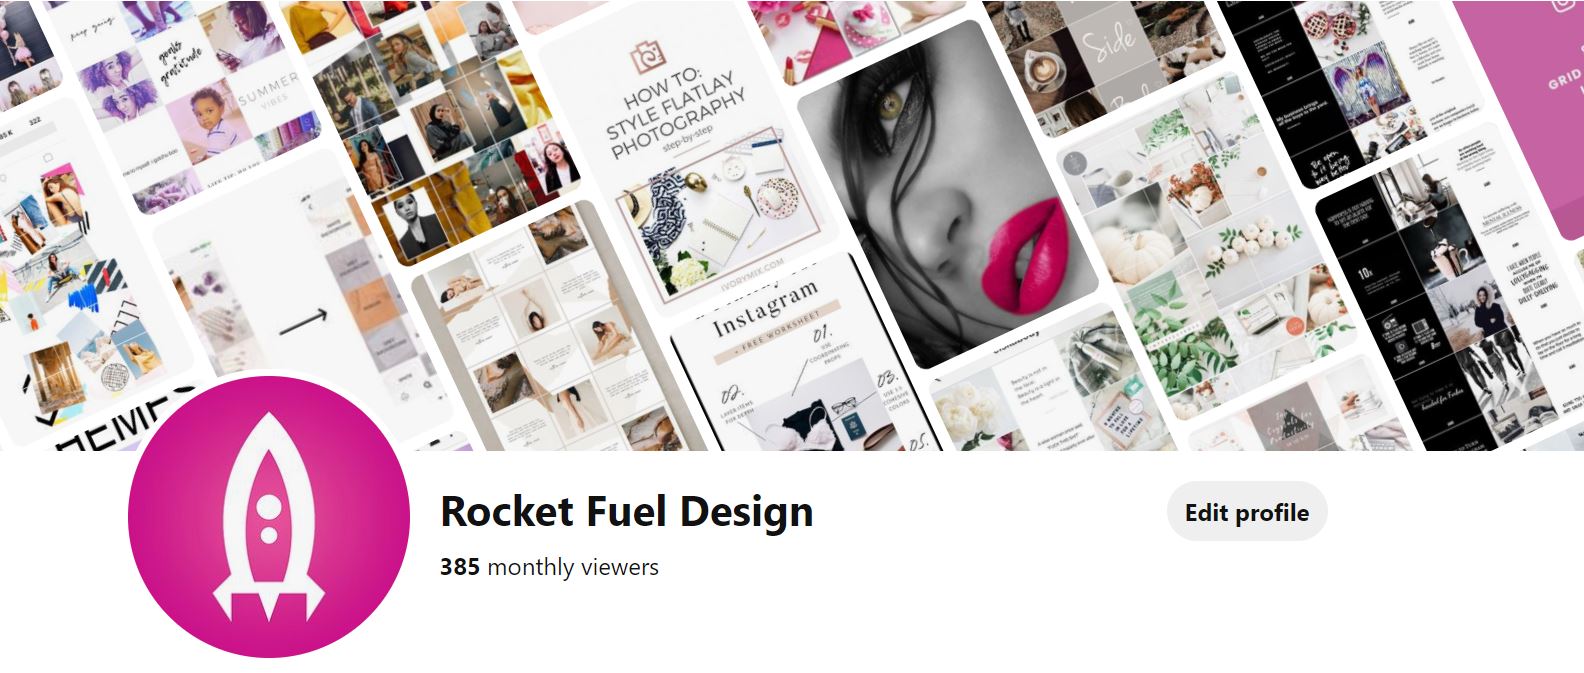 Social Media Image Sizing Guide 2020| Rocket Fuel Design's Pinterest Profile Page